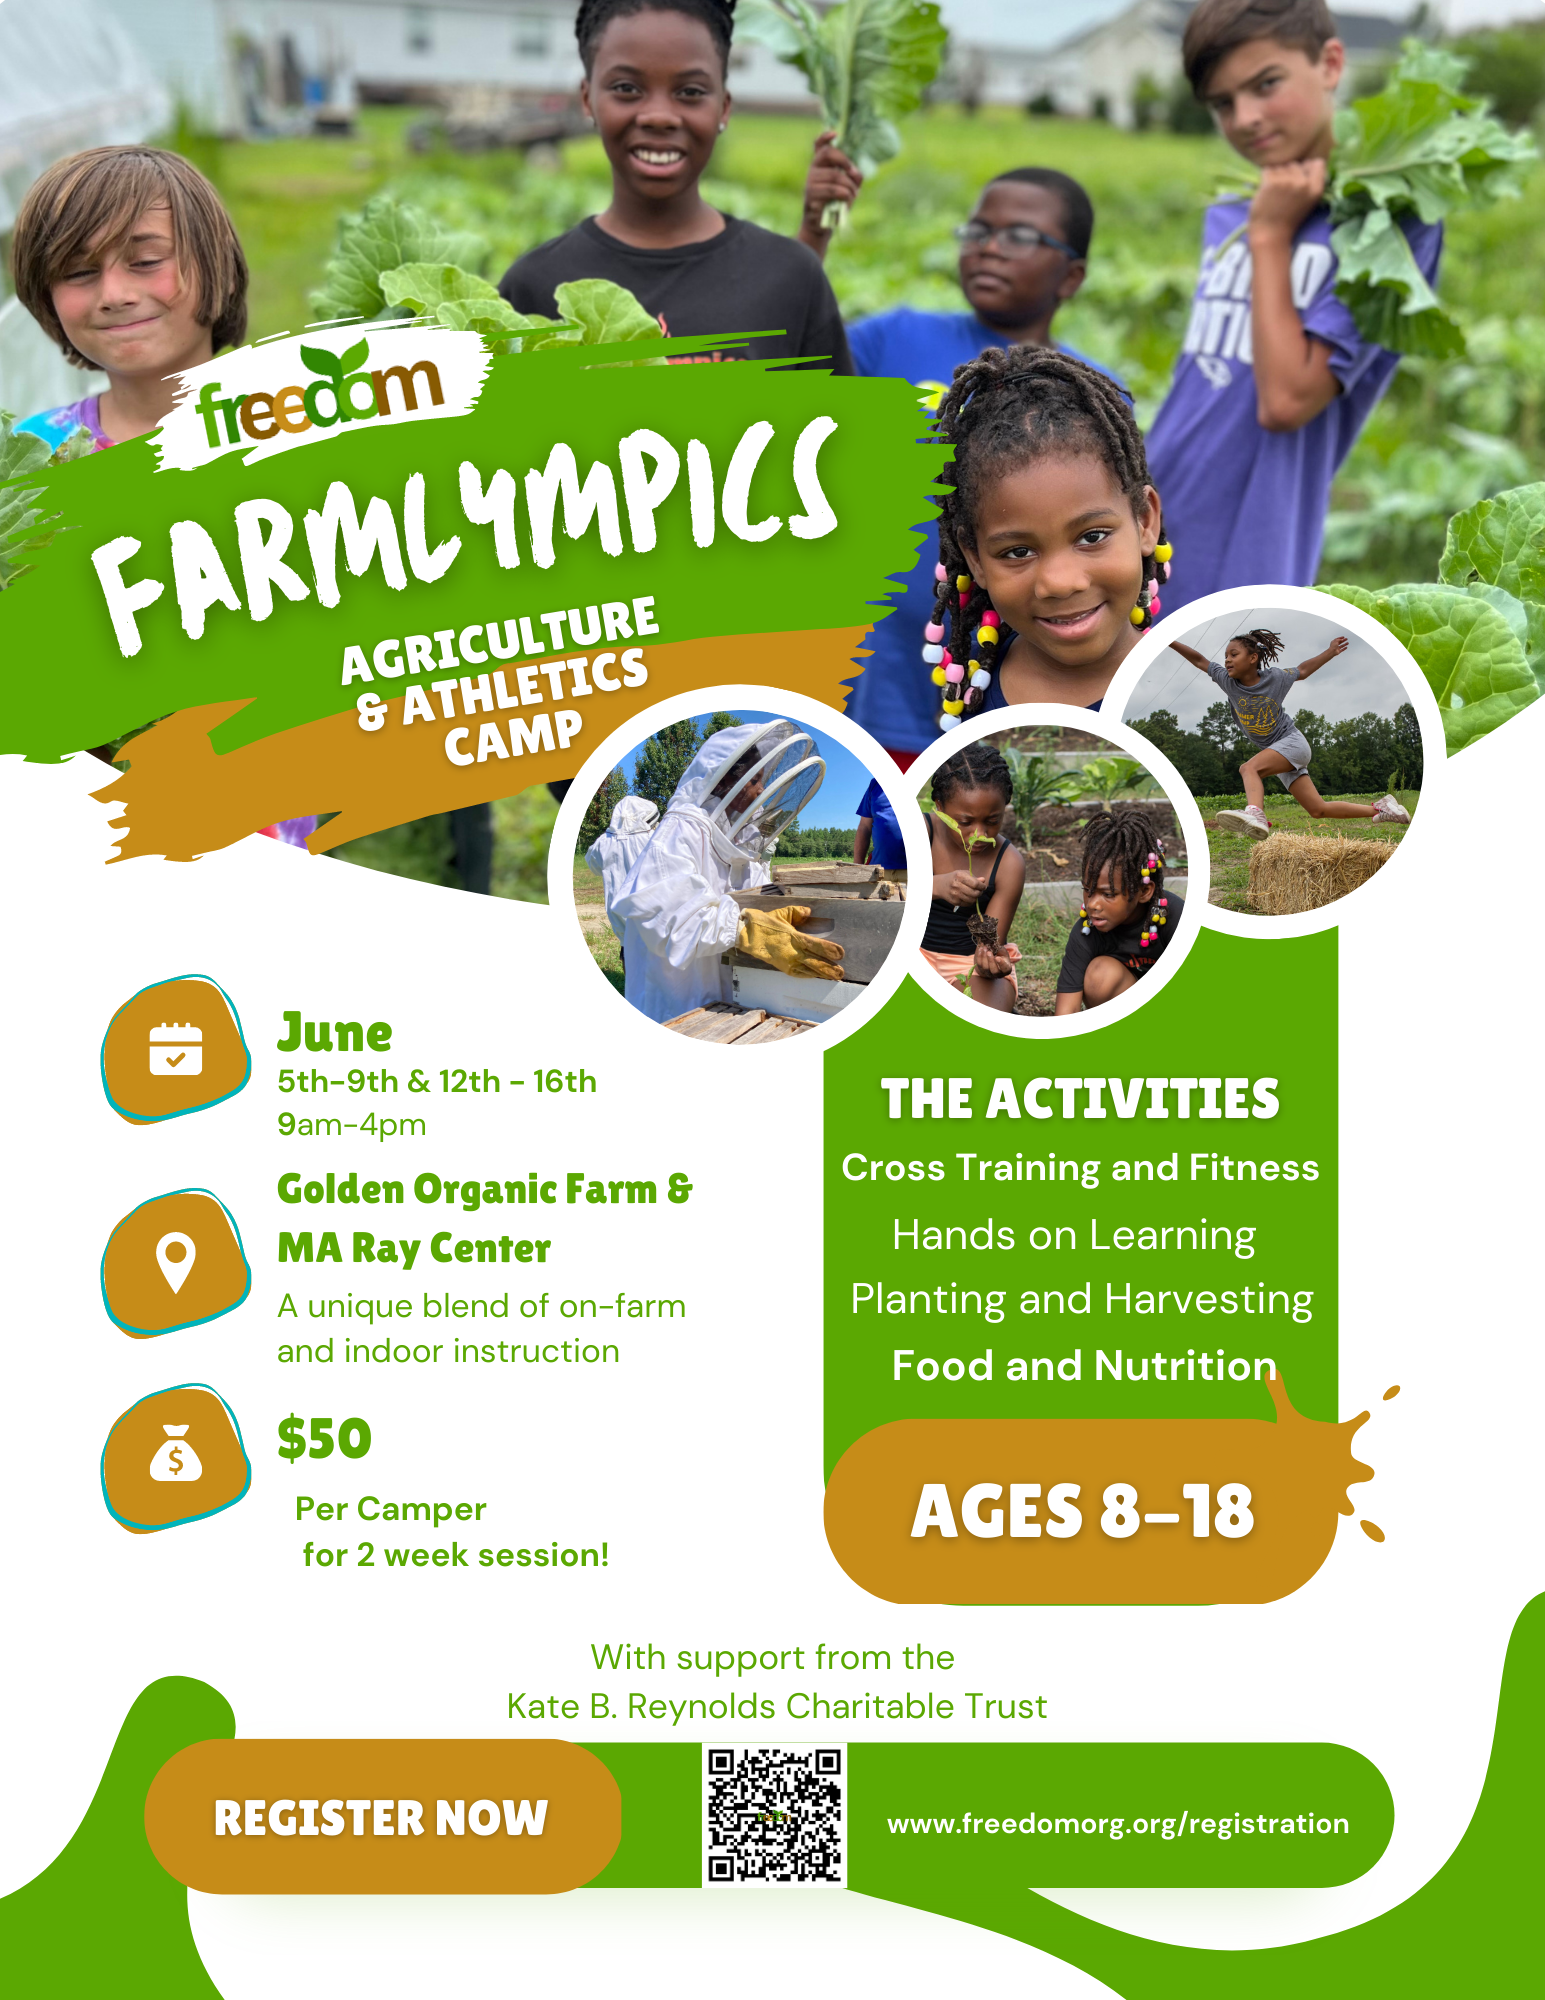 Freedom Organization's flyer for FarmLympics Agriculture & Athletics Camp